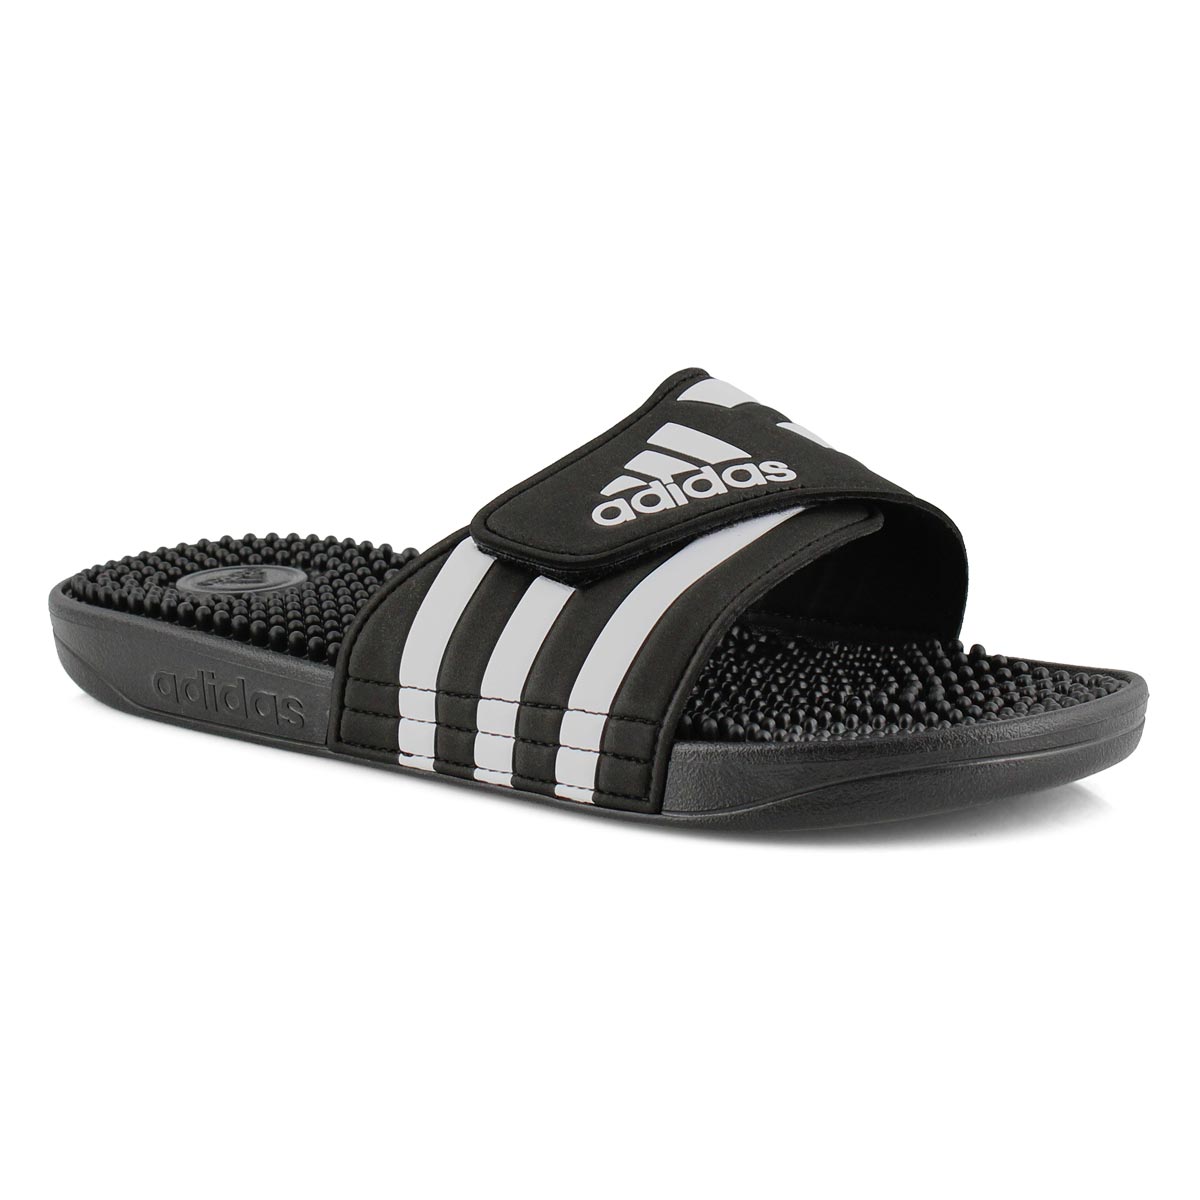 adidas adissage womens slide sandals